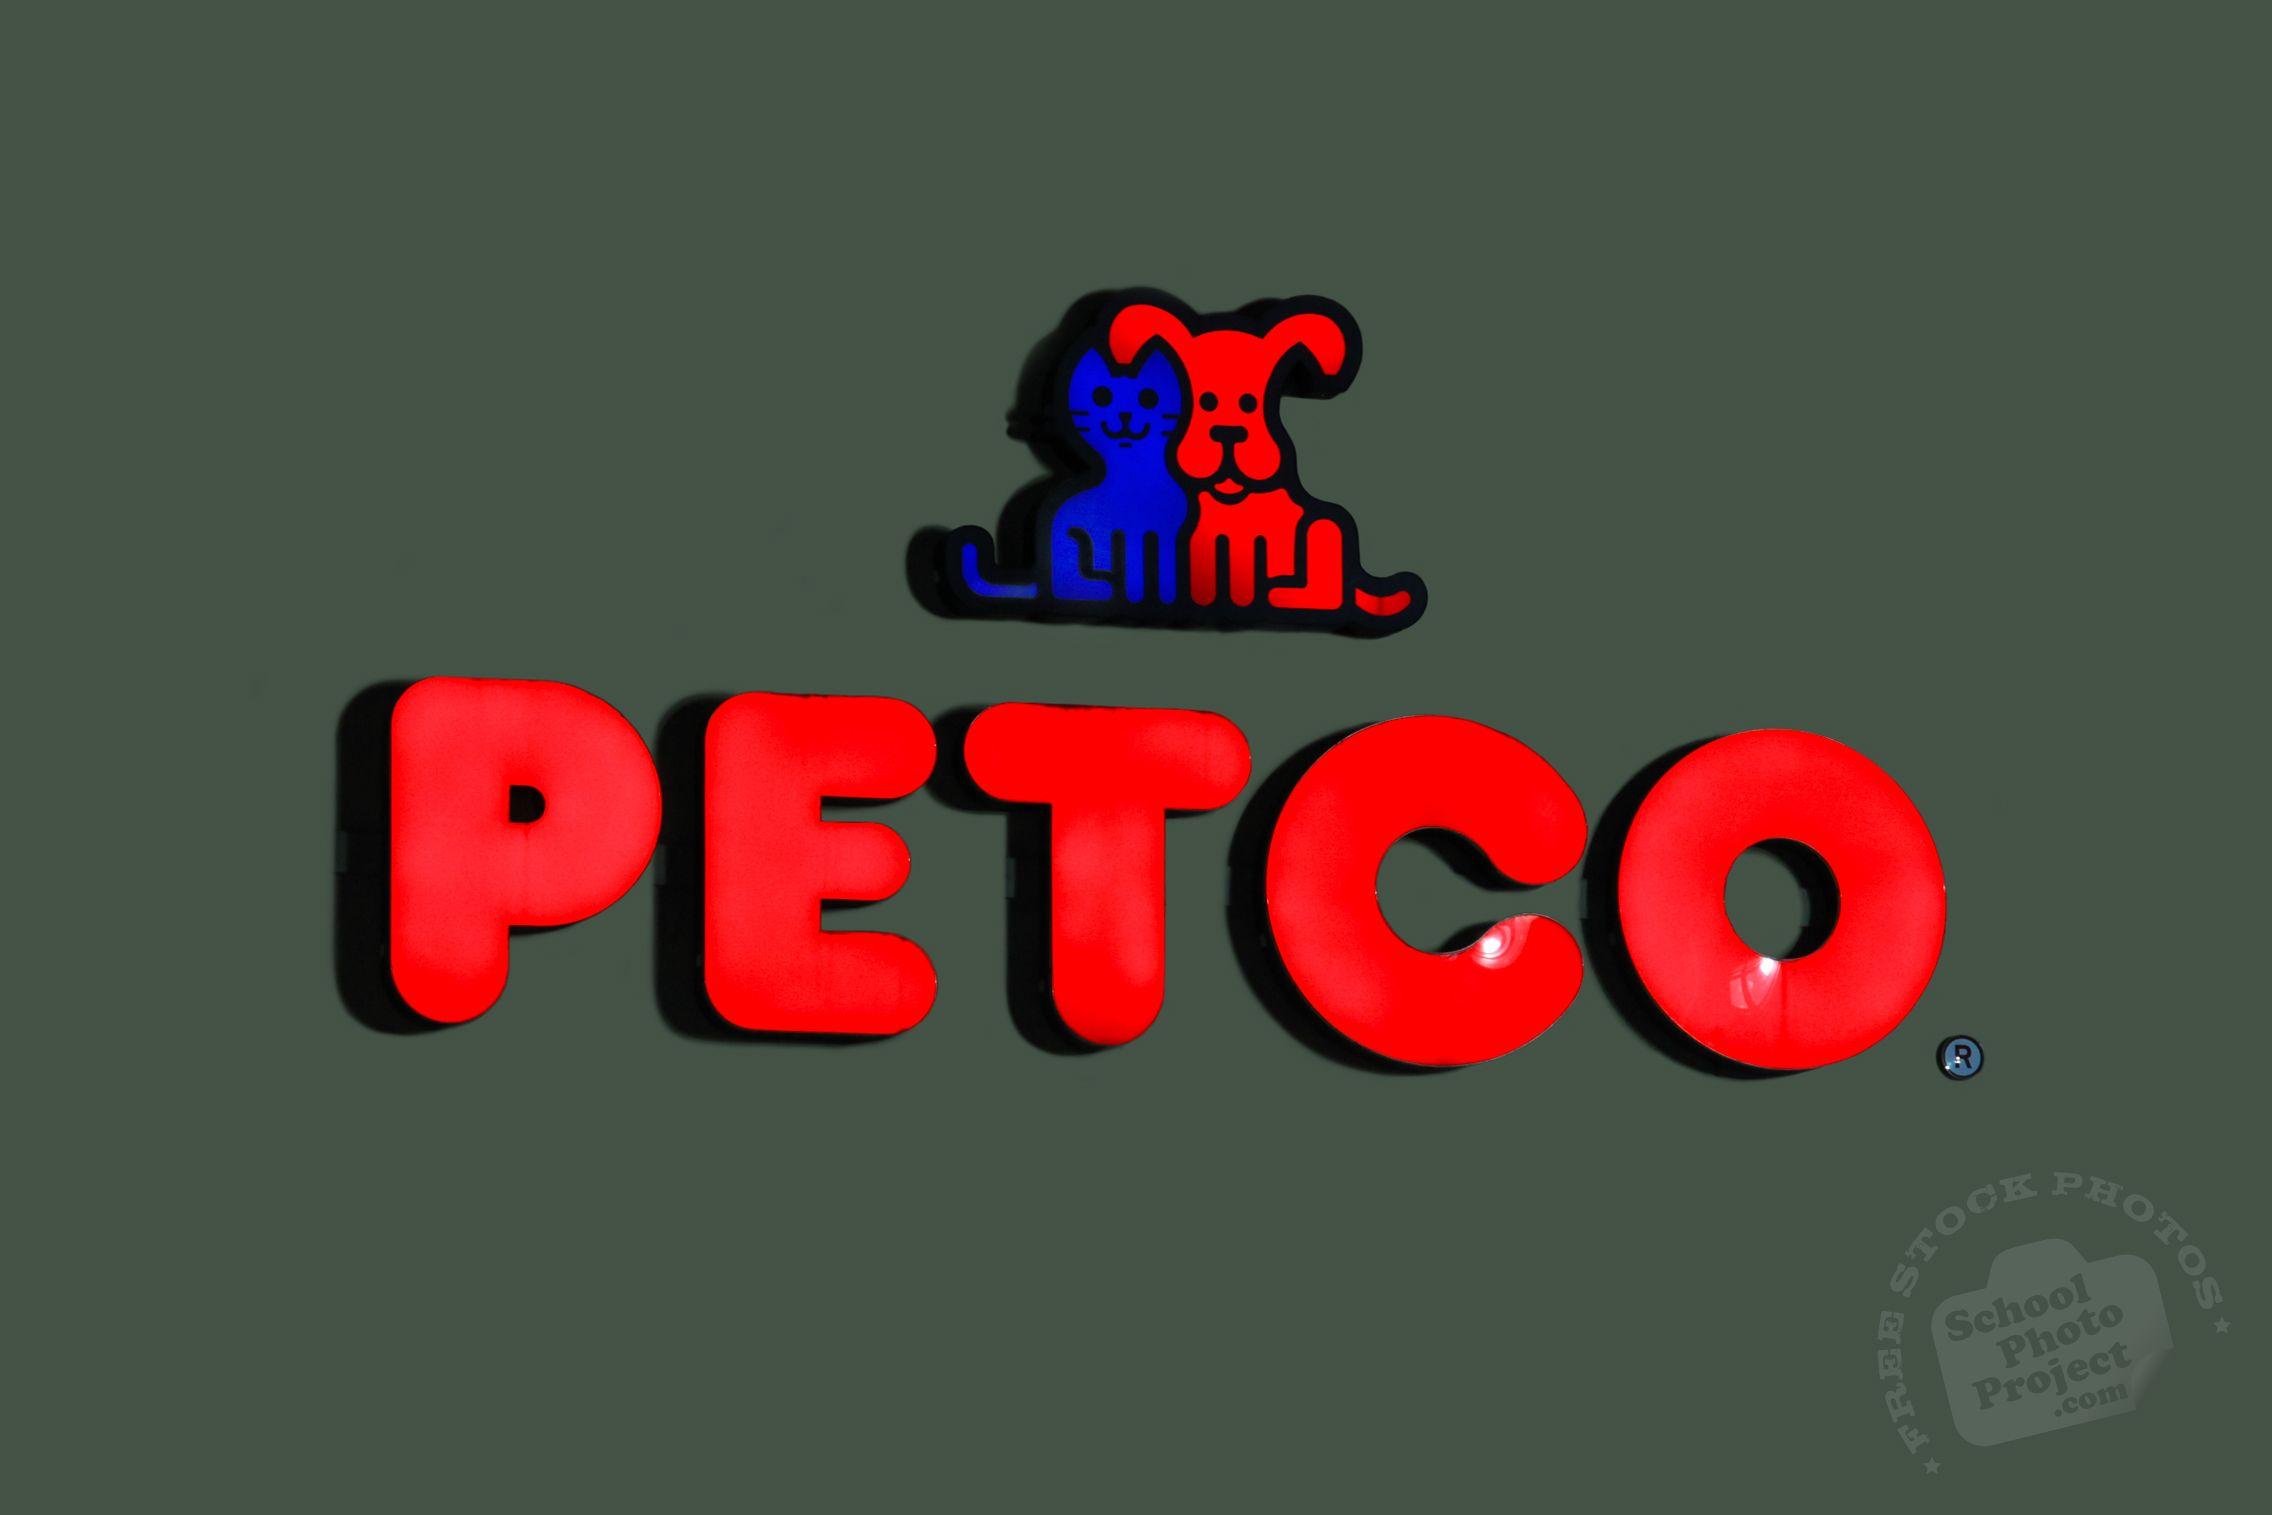 Petco Logo - FREE Petco Logo, Petco Pet Store Identity, Popular Company's Brand ...